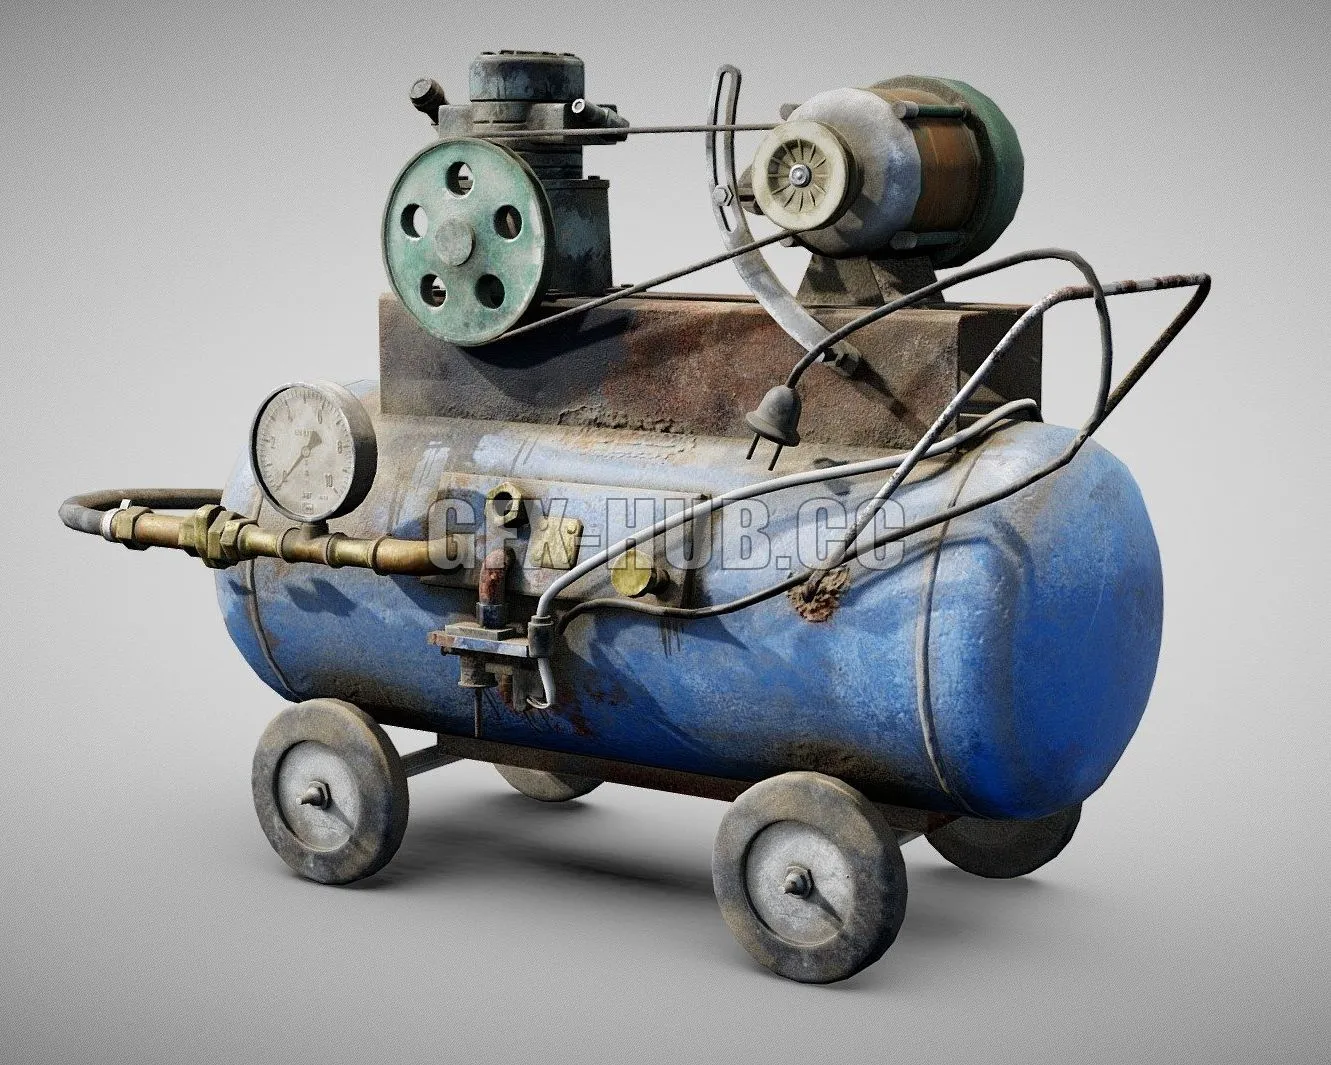 PBR Game 3D Model – Old handmade air compressor tool